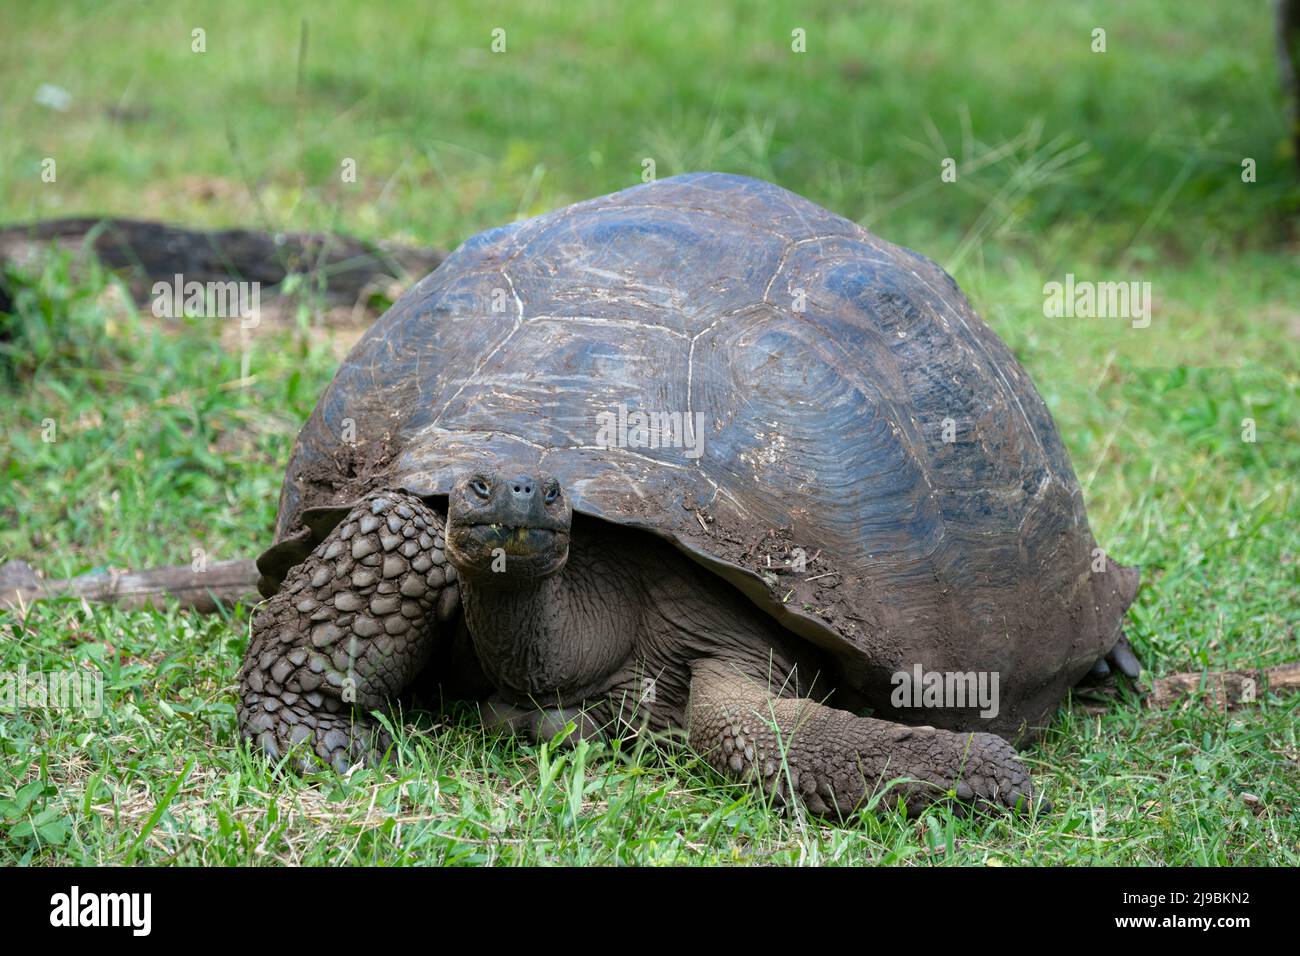 Ecuador, Galapagos, Santa Cruz Island, El Chato Ranch. Wild Galapagos Giant Tortoise (Geochelone nigrita) dome-shaped tortoises. Stock Photo